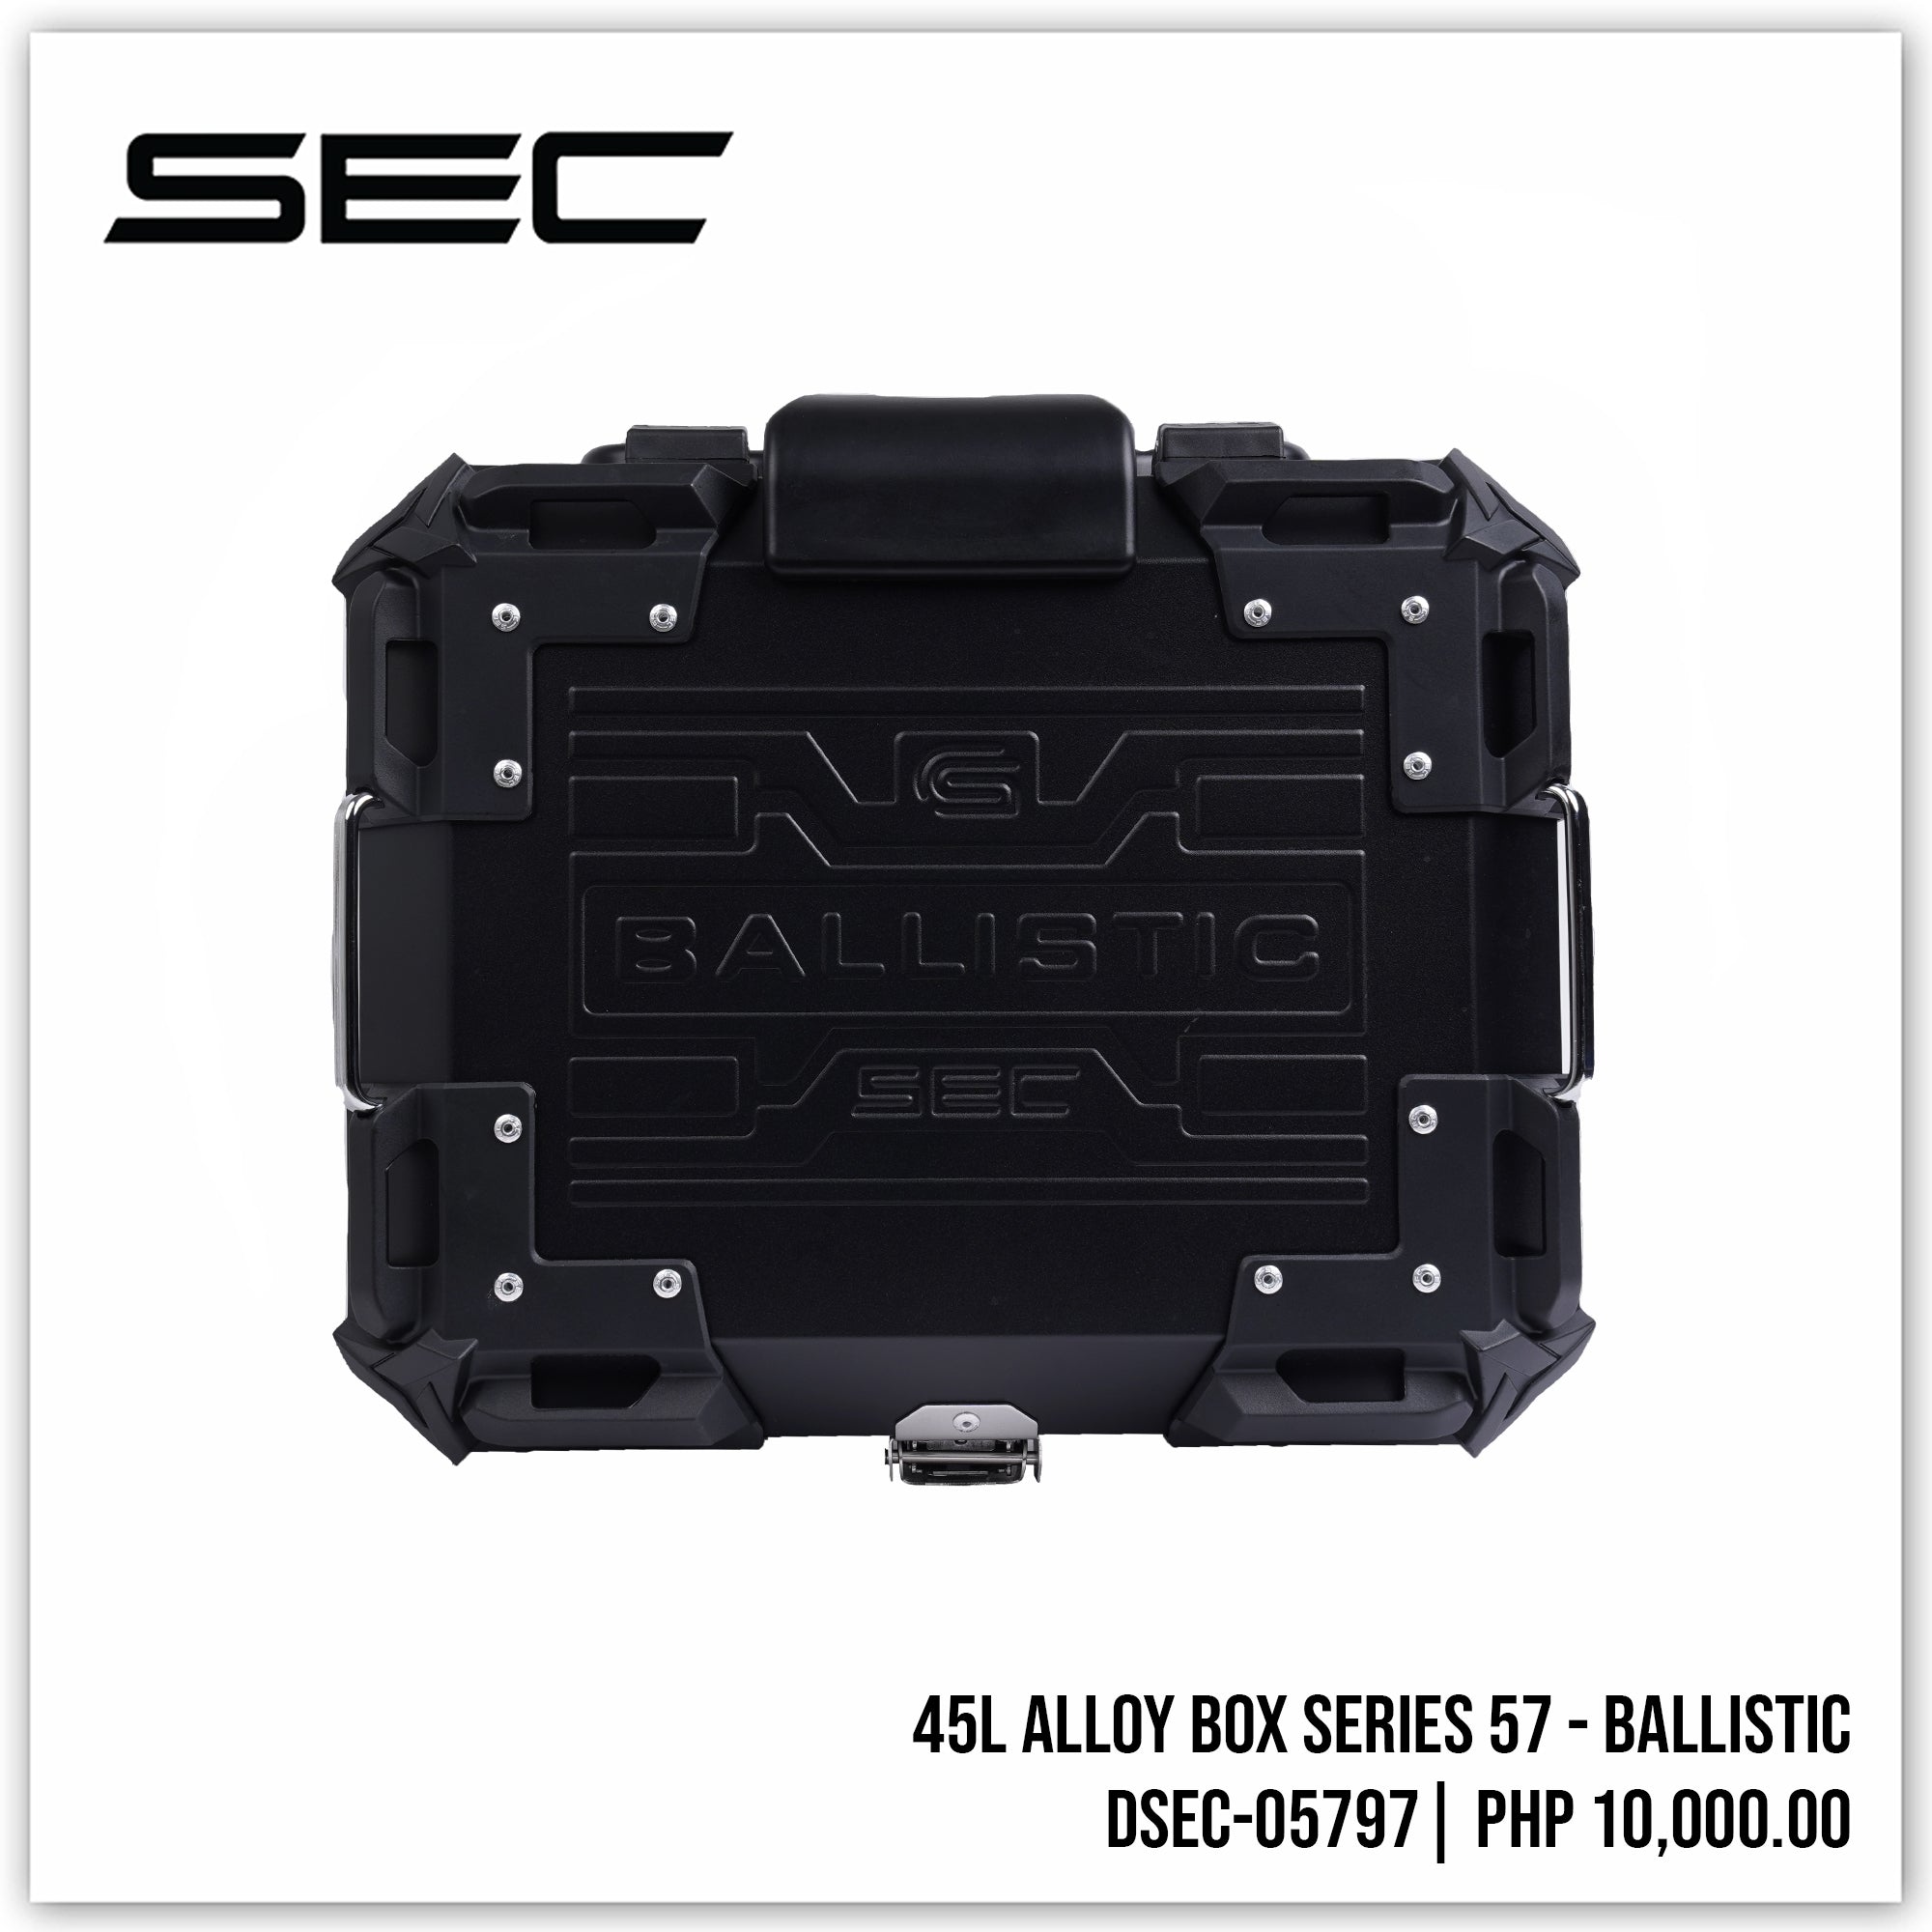 45L Alloy Box Series 57 - BALLISTIC